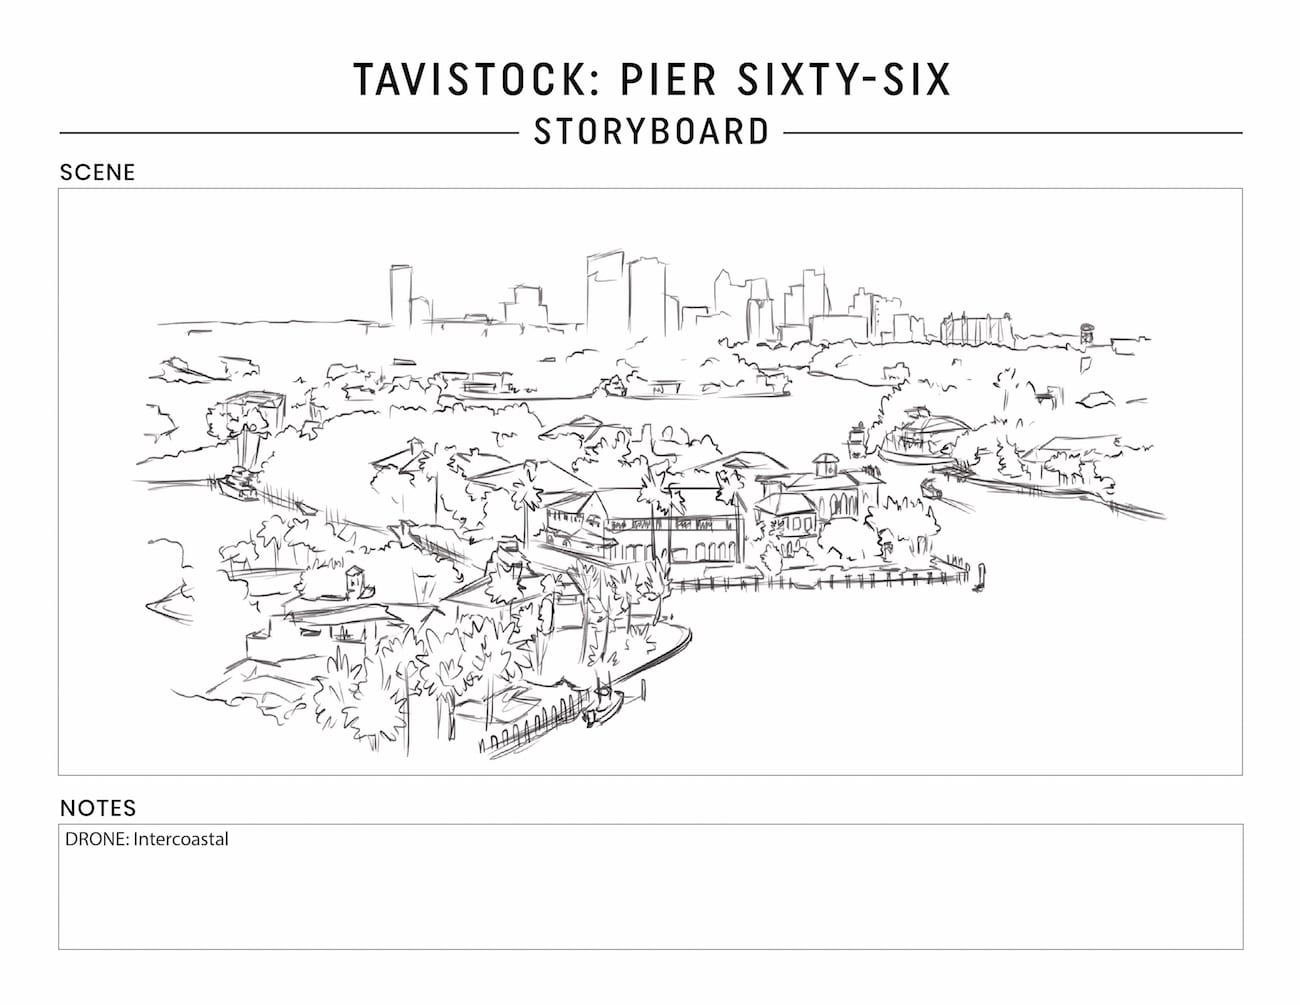 Tavistock Development Company C&I Studios Marketing Solutions Pier Sixty Six Storyboard Drone intercoastal